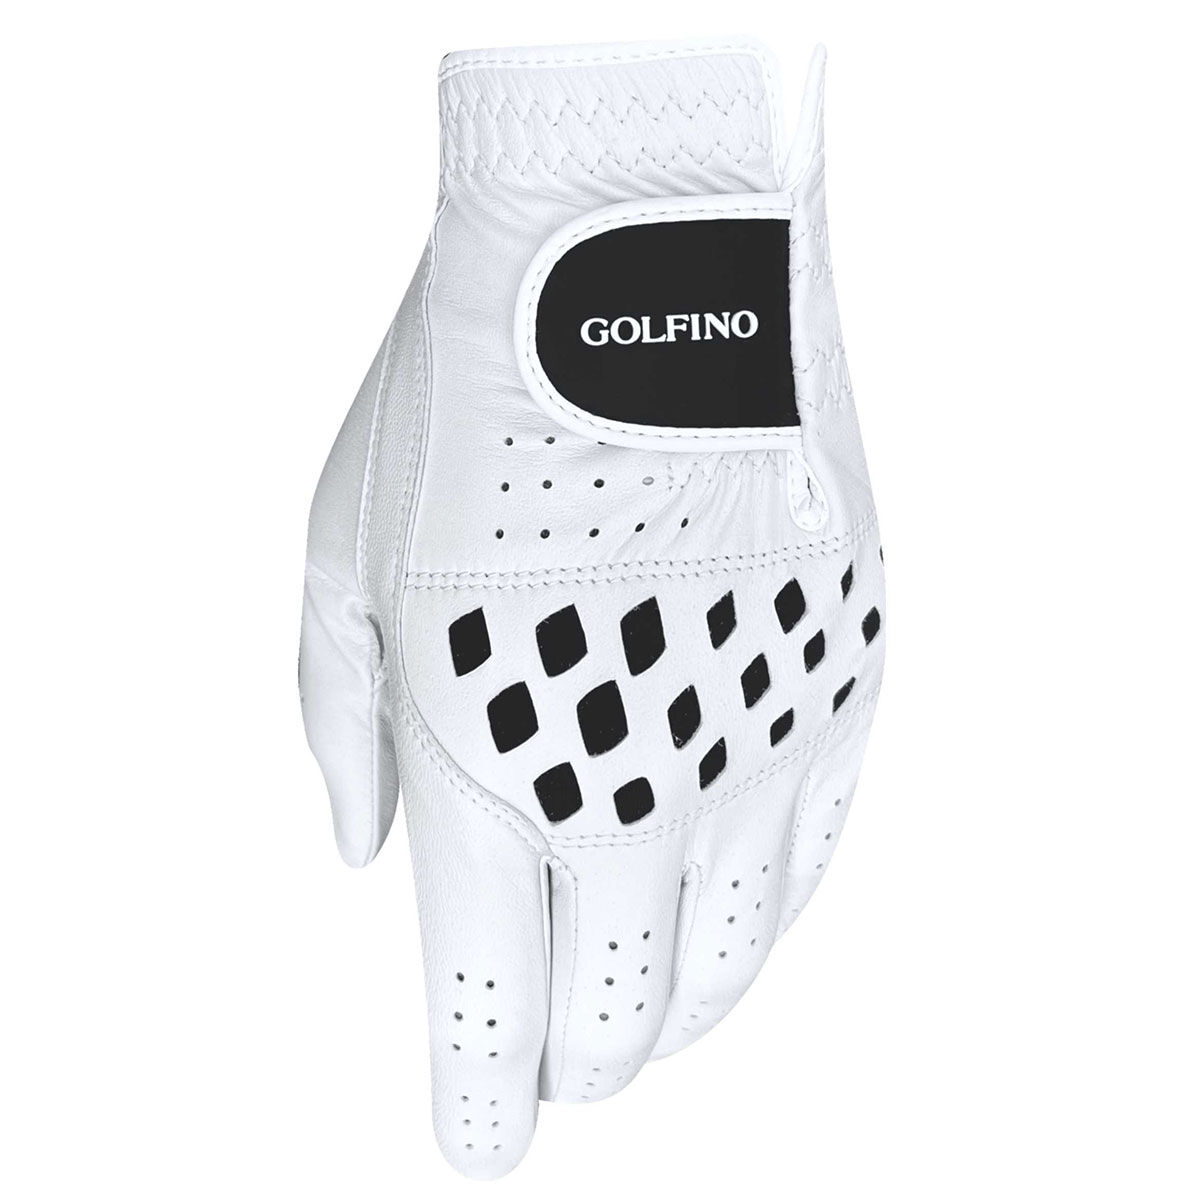 GOLFINO Men’s Cabretta Golf Glove, Mens, Left hand, Large, White/black | American Golf